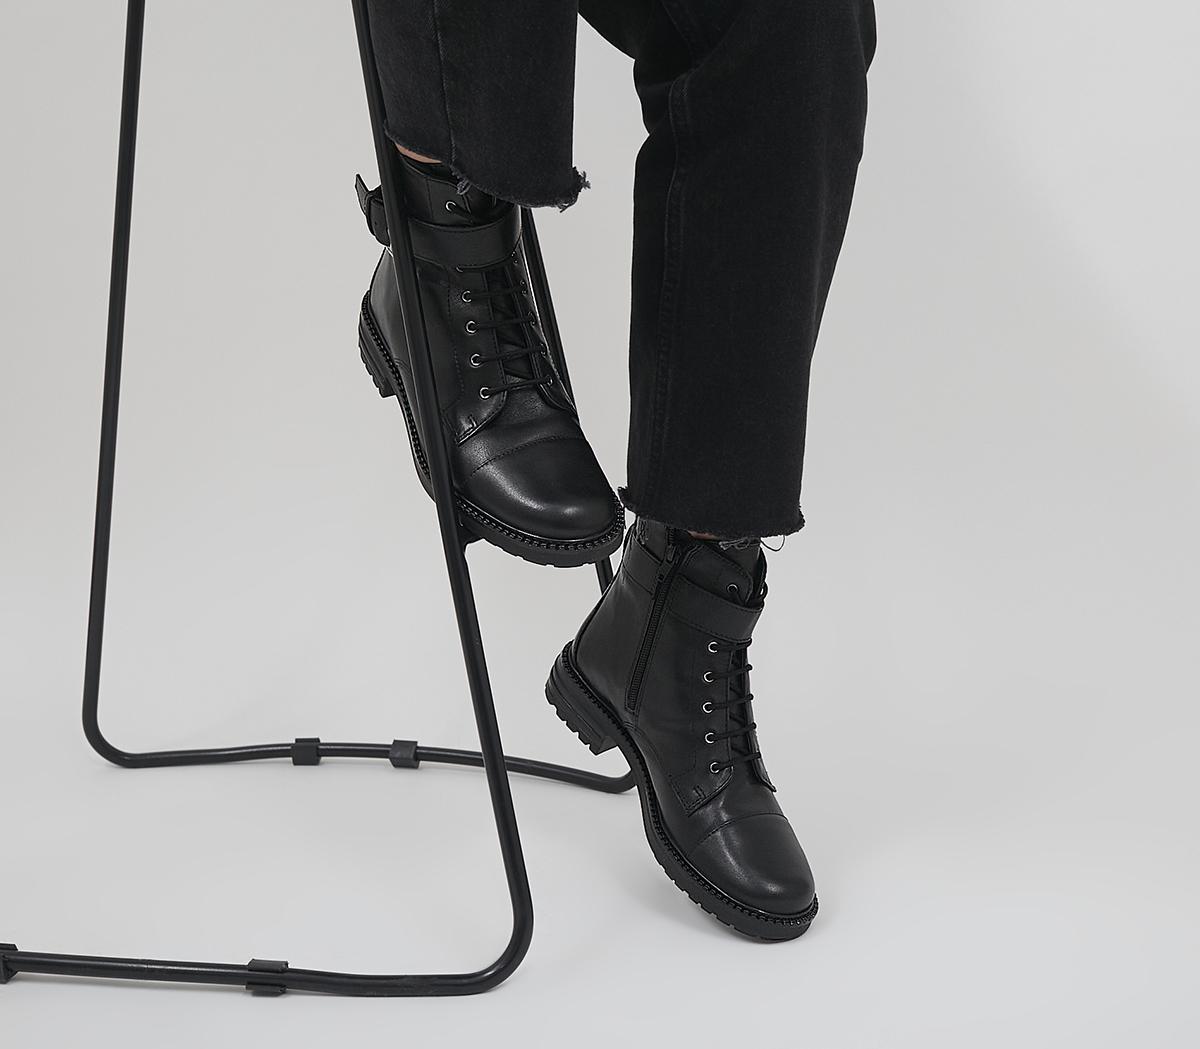 OFFICE Alpaca Buckle Lace Up Biker Boots Black Leather - Women's Ankle Boots